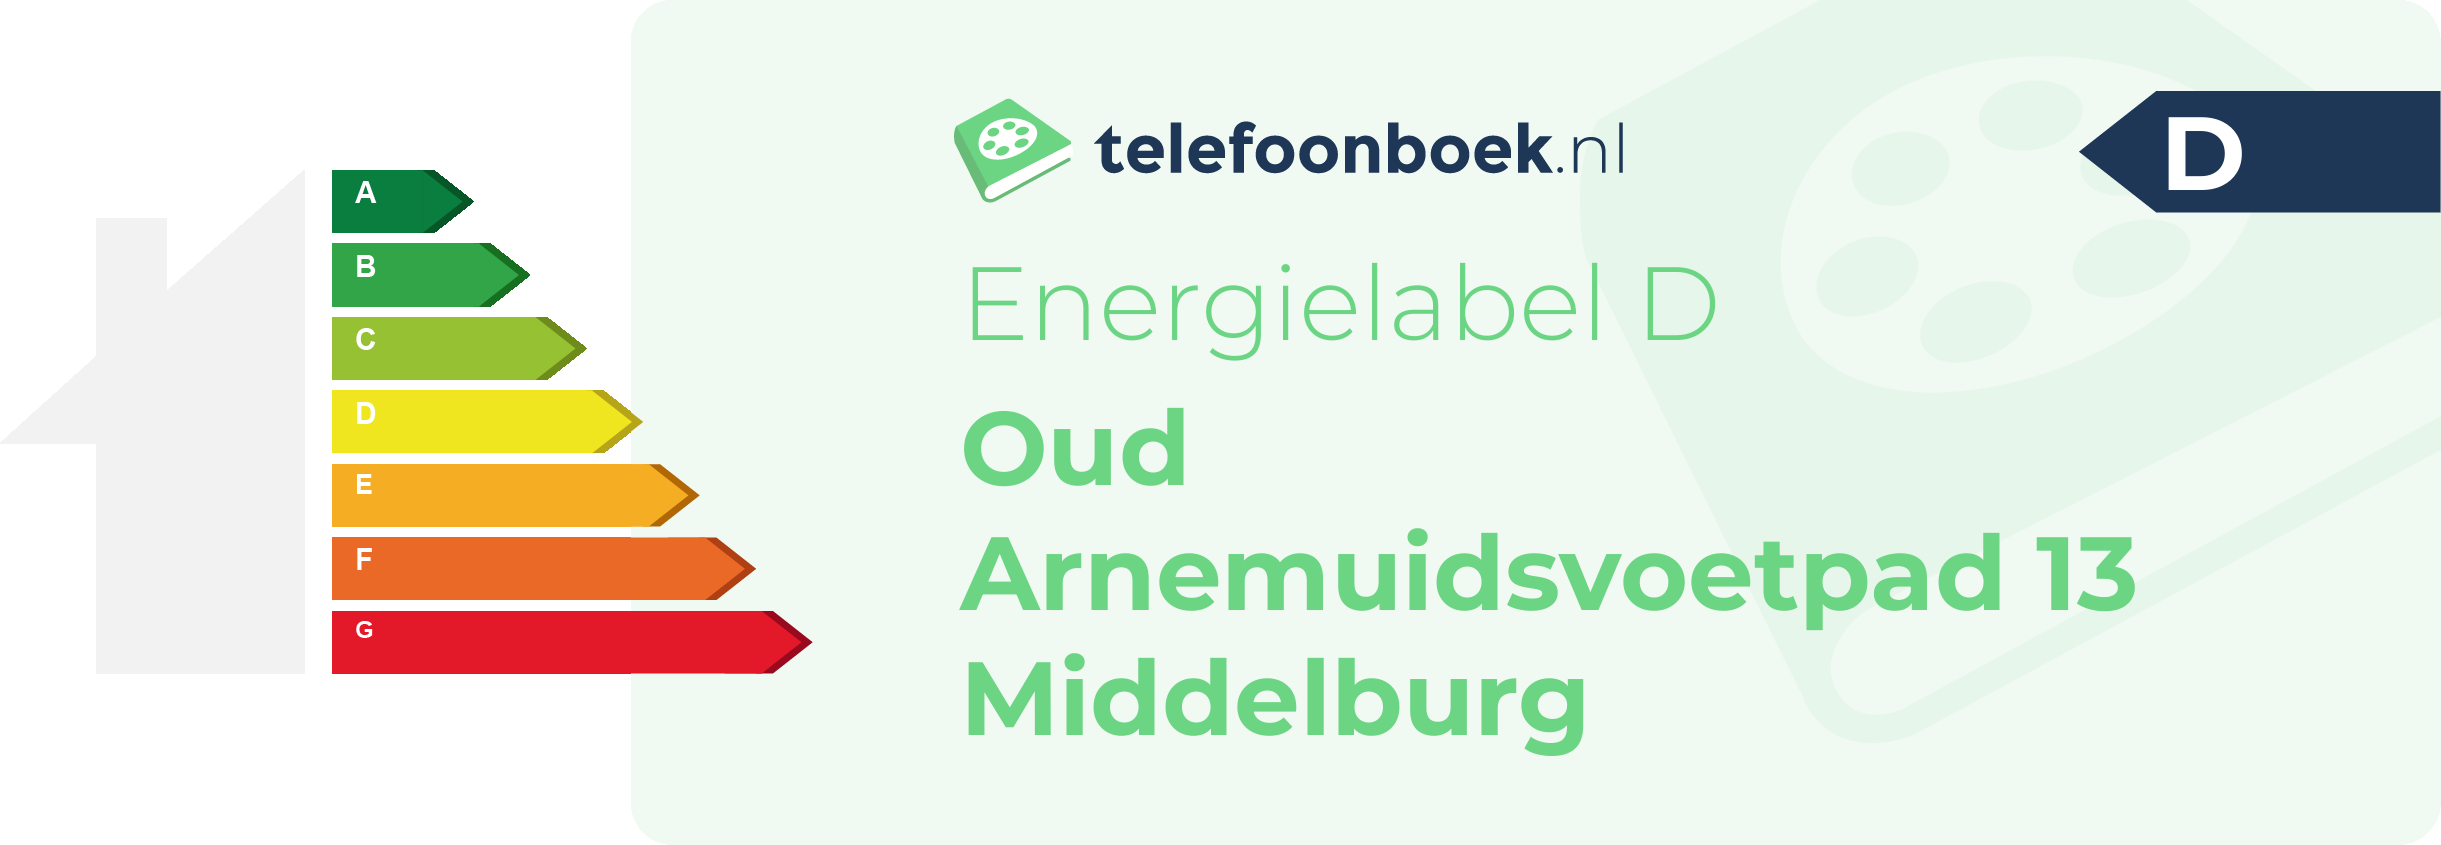 Energielabel Oud Arnemuidsvoetpad 13 Middelburg